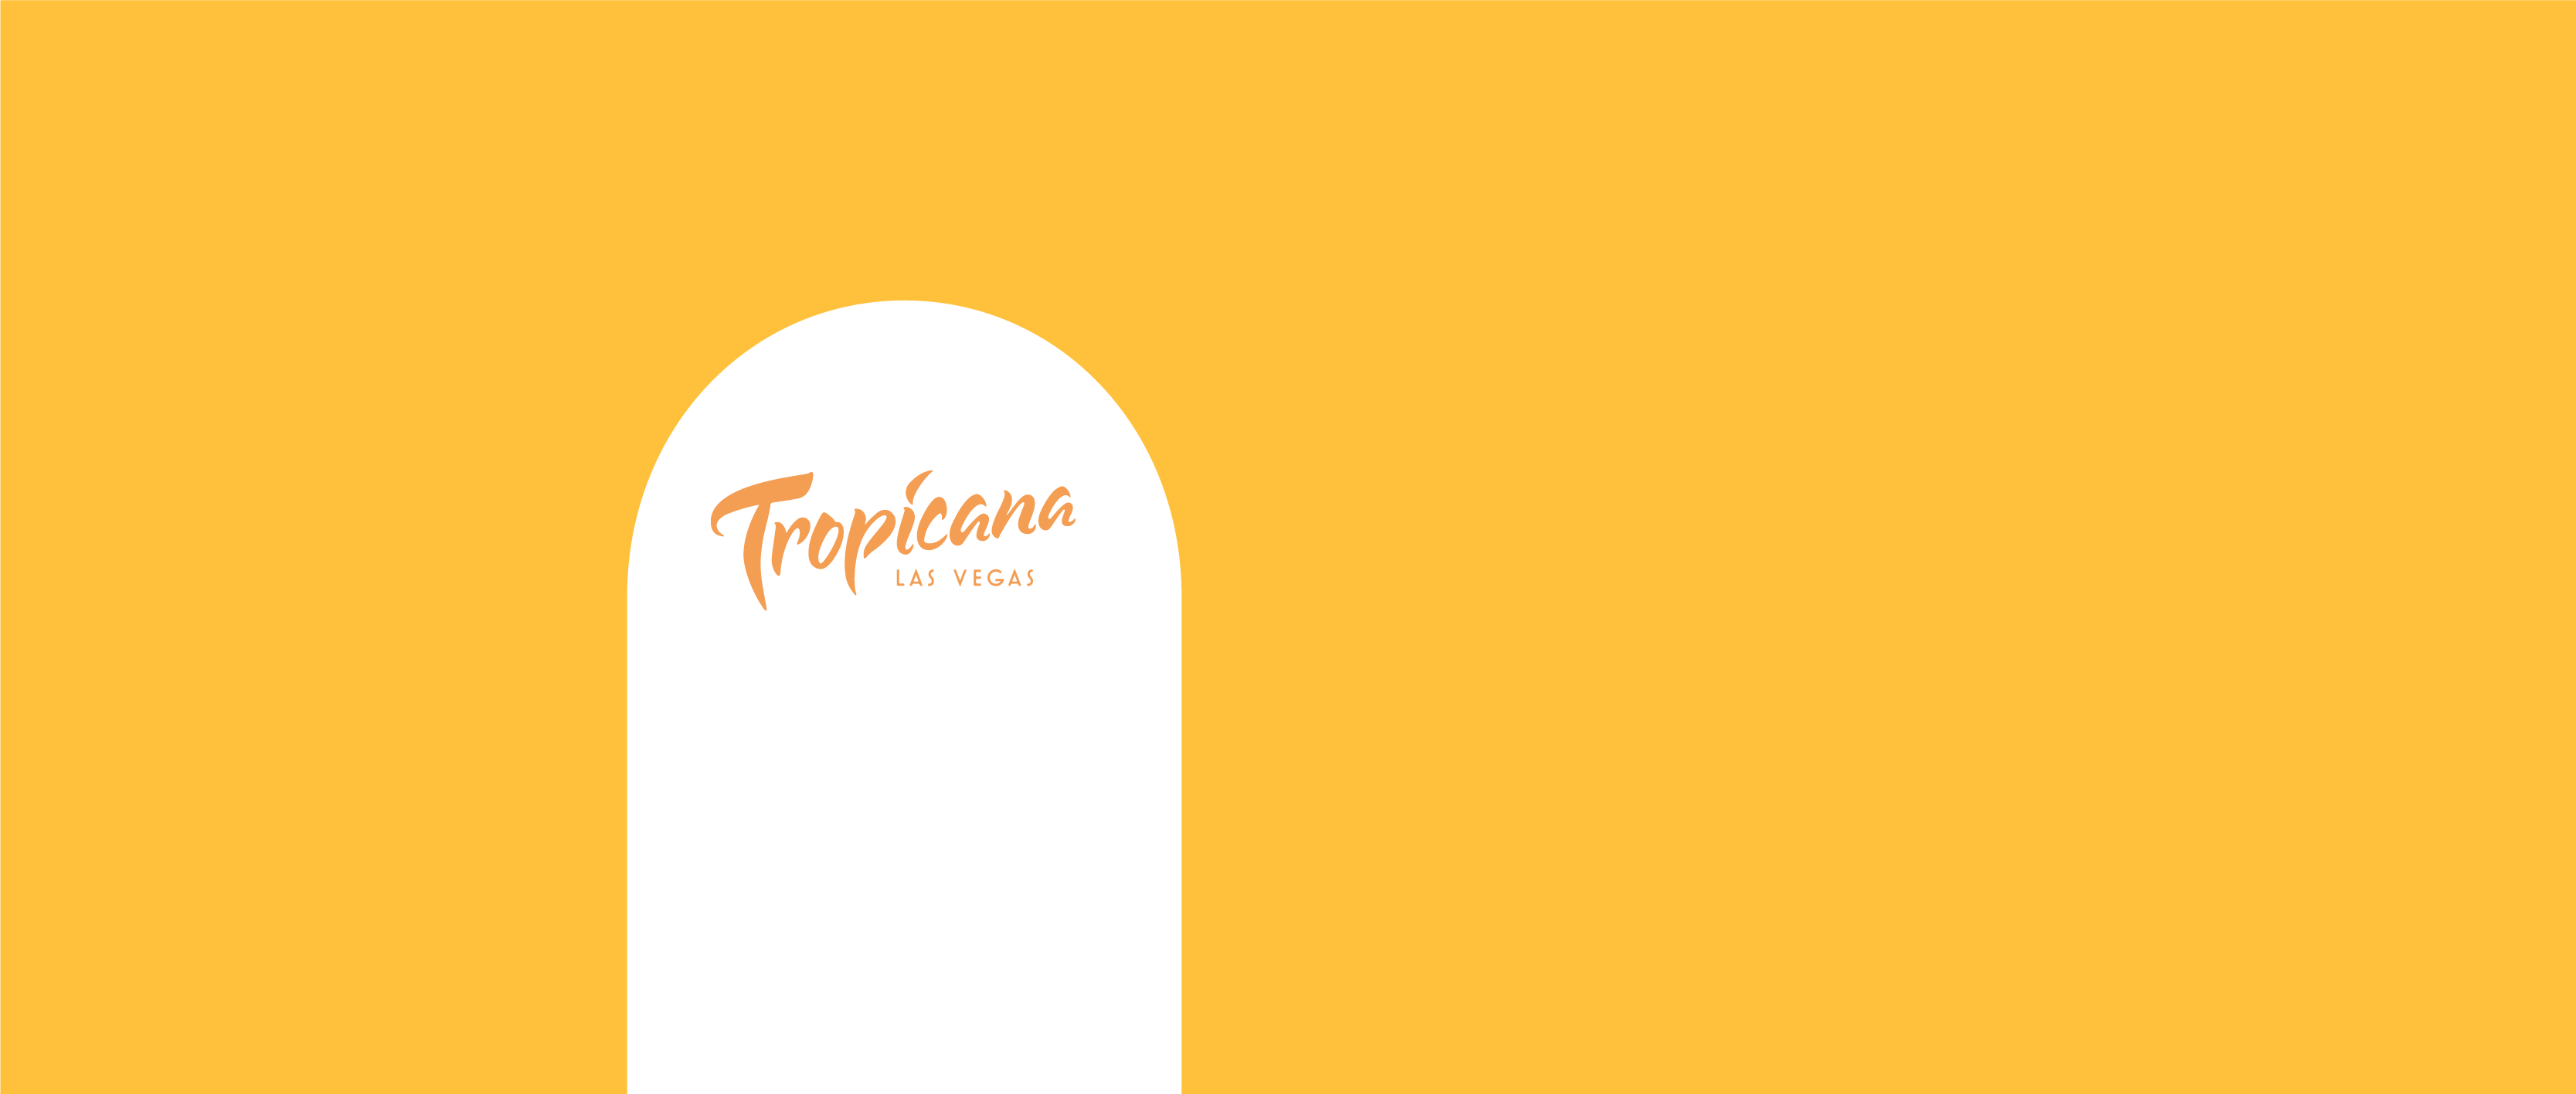 Tropicana_Case Study_Header-09